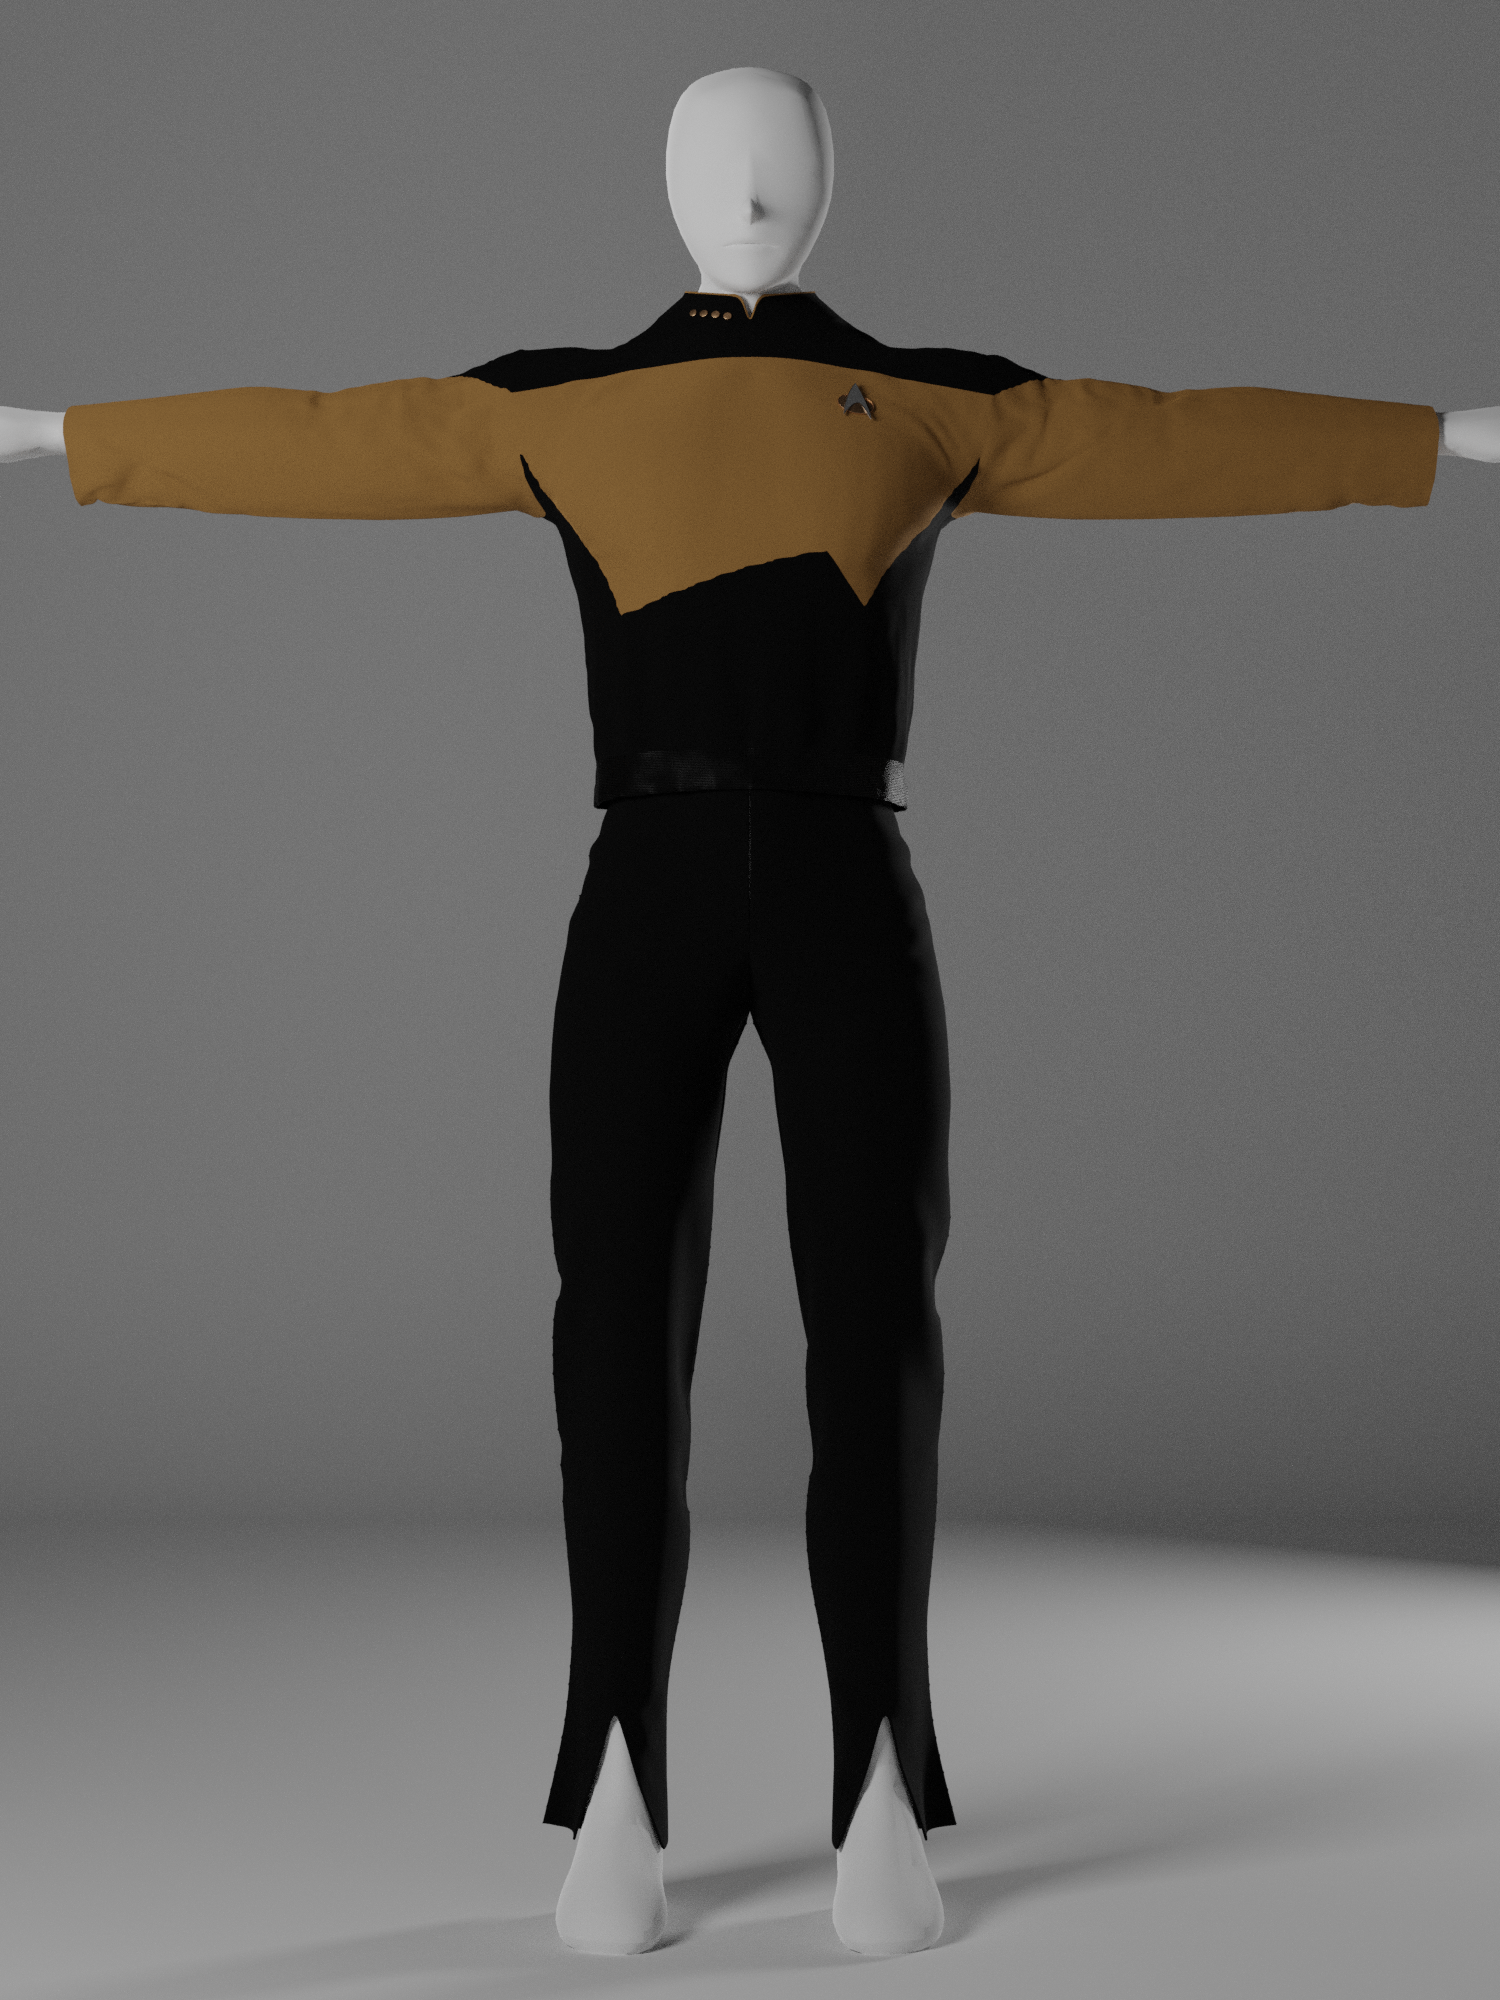 Star Trek TNG Uniform (S3+) preview image 3